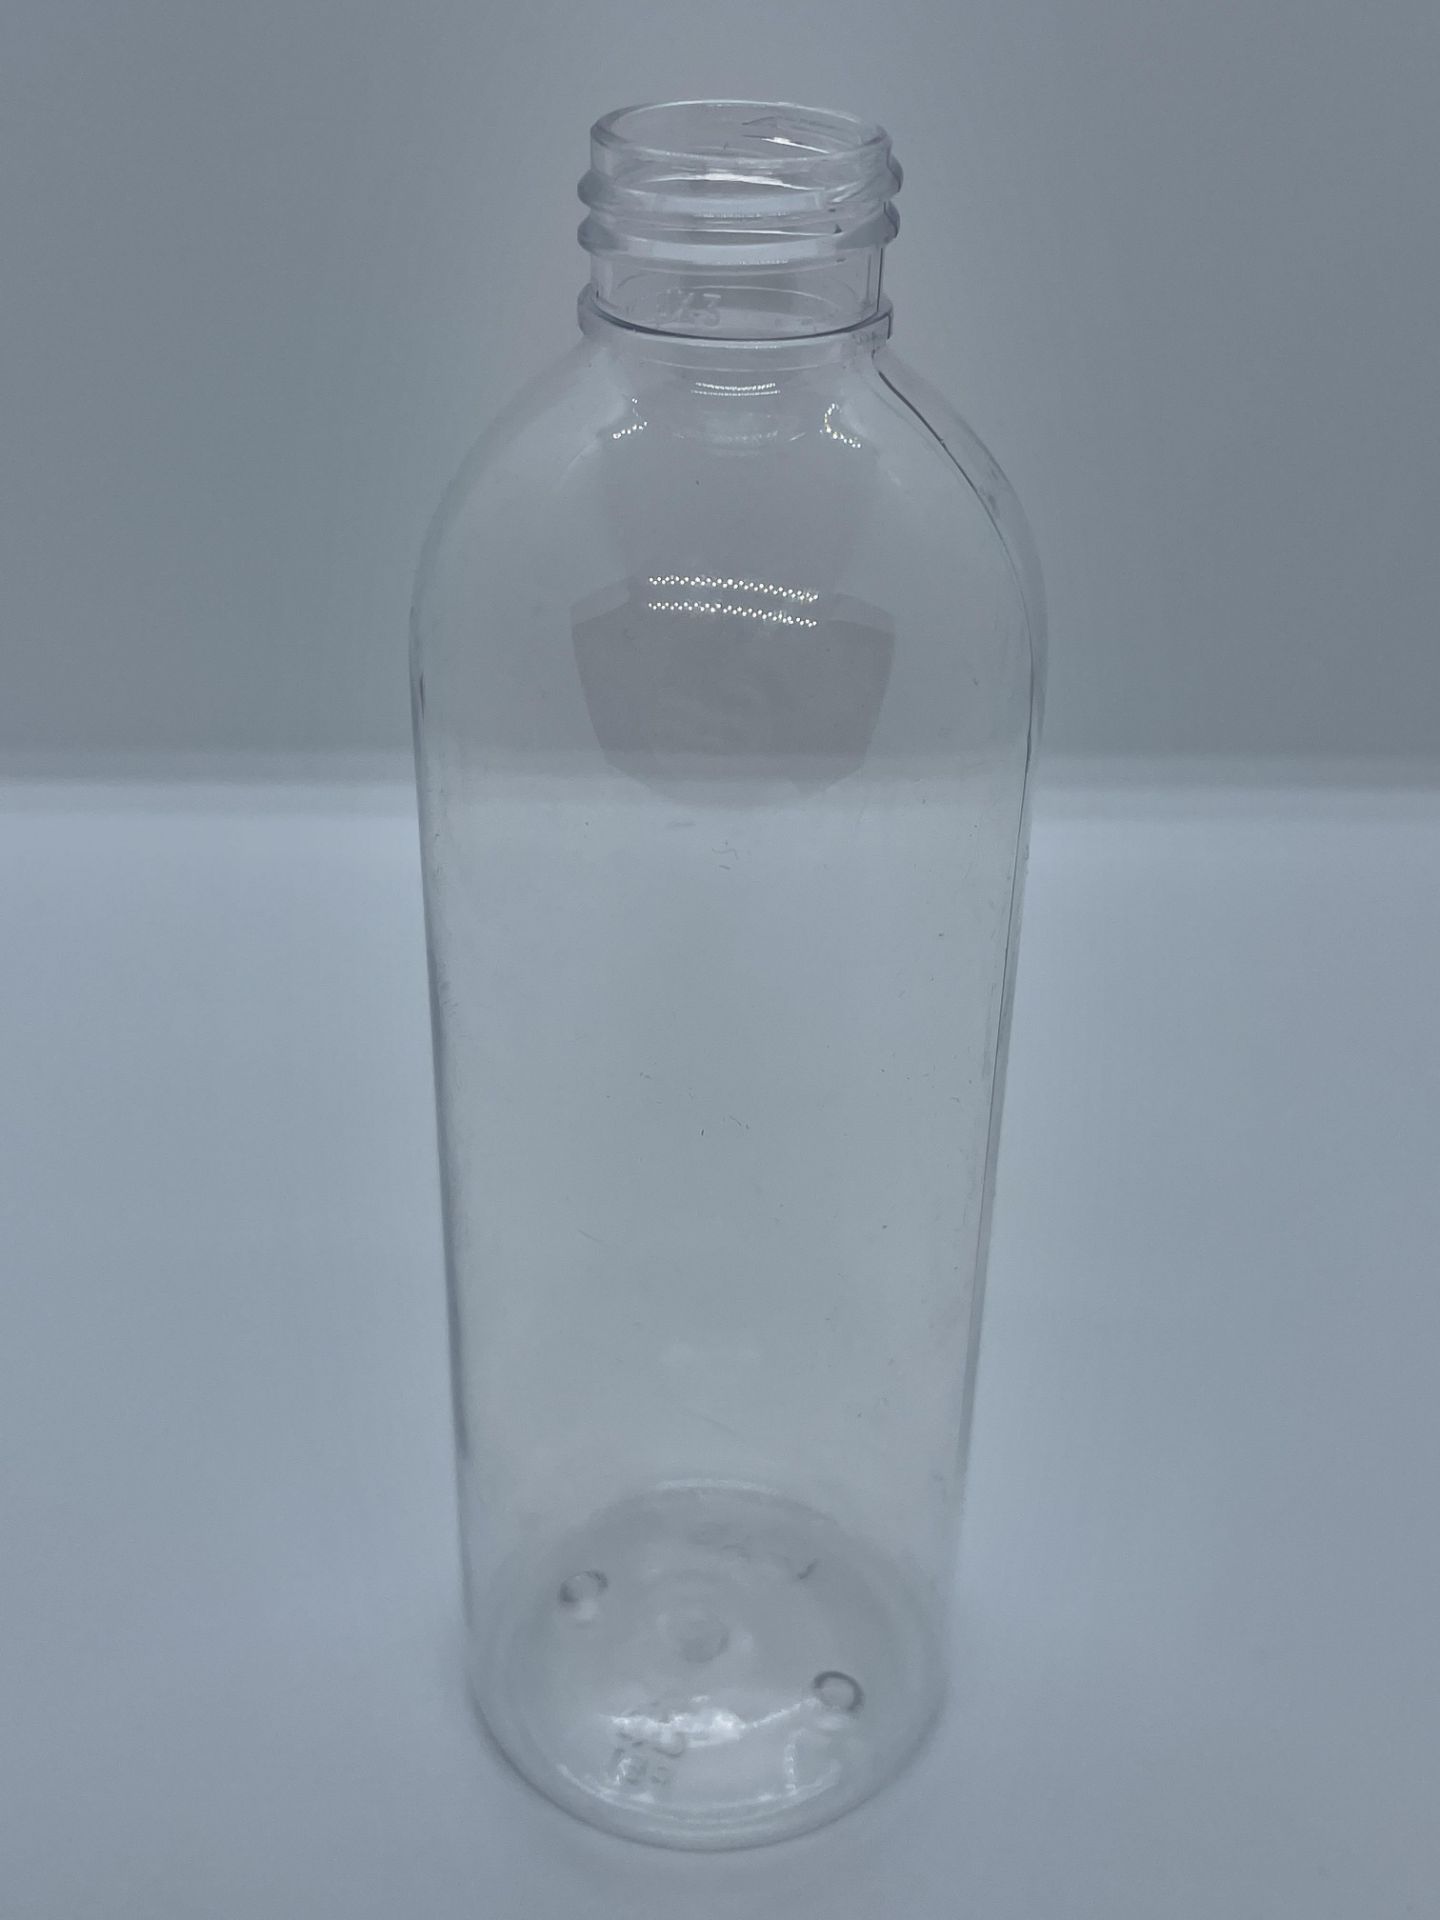 75,000 - Clear Plastic Bullet 8 oz Empty Bottles, 24-410 Threading Neck, 6.25" Tall, 2" Diameter - Image 8 of 10